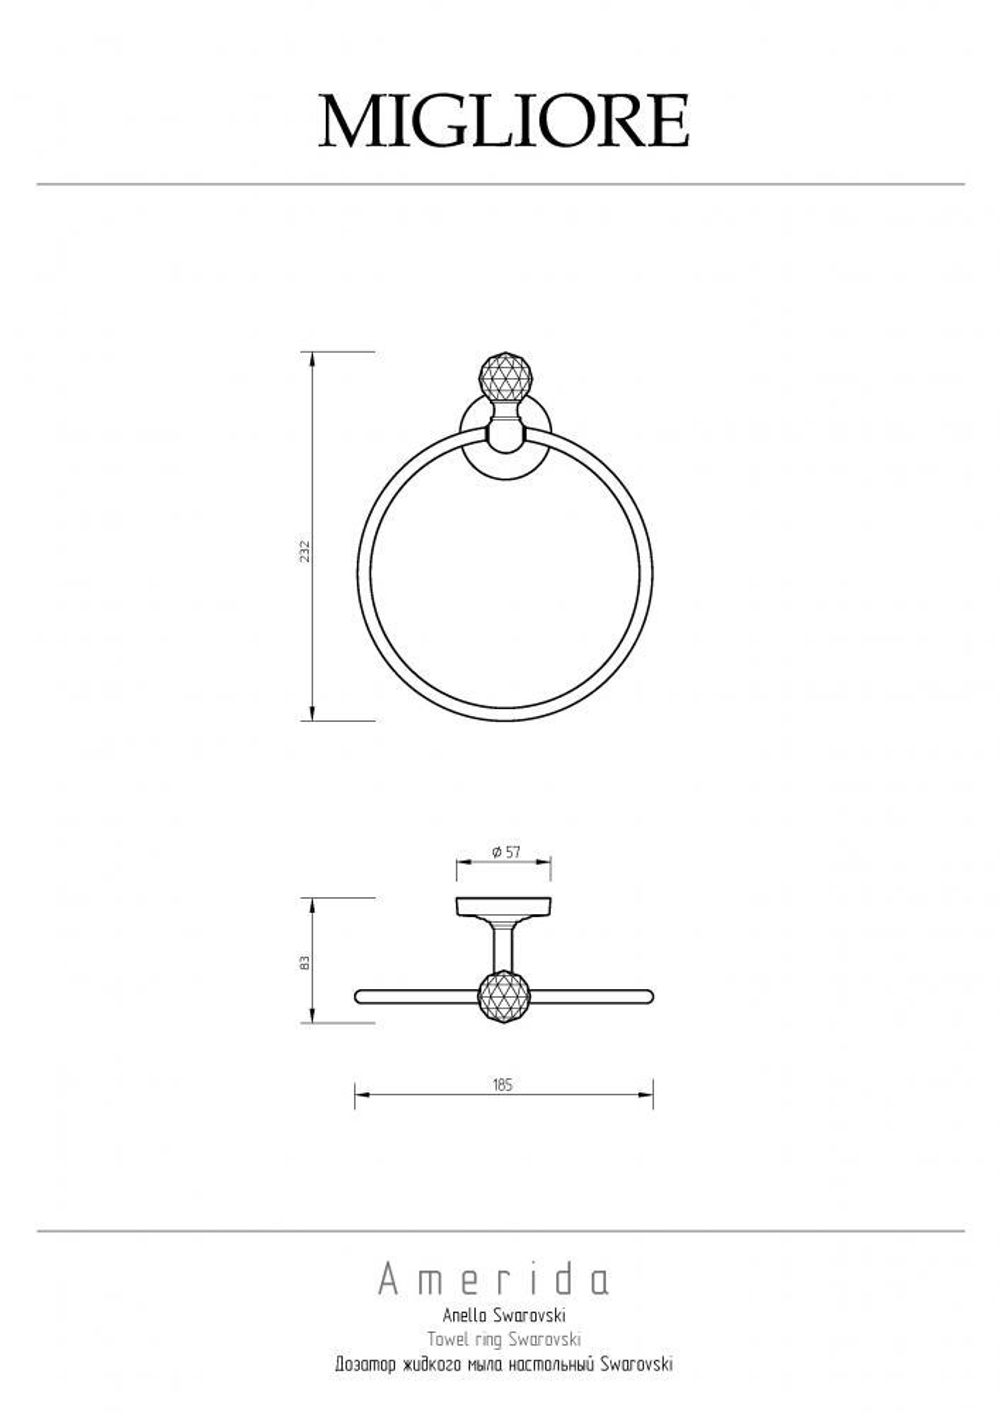 Кольцо для полотенец Migliore Amerida 16562 бронза